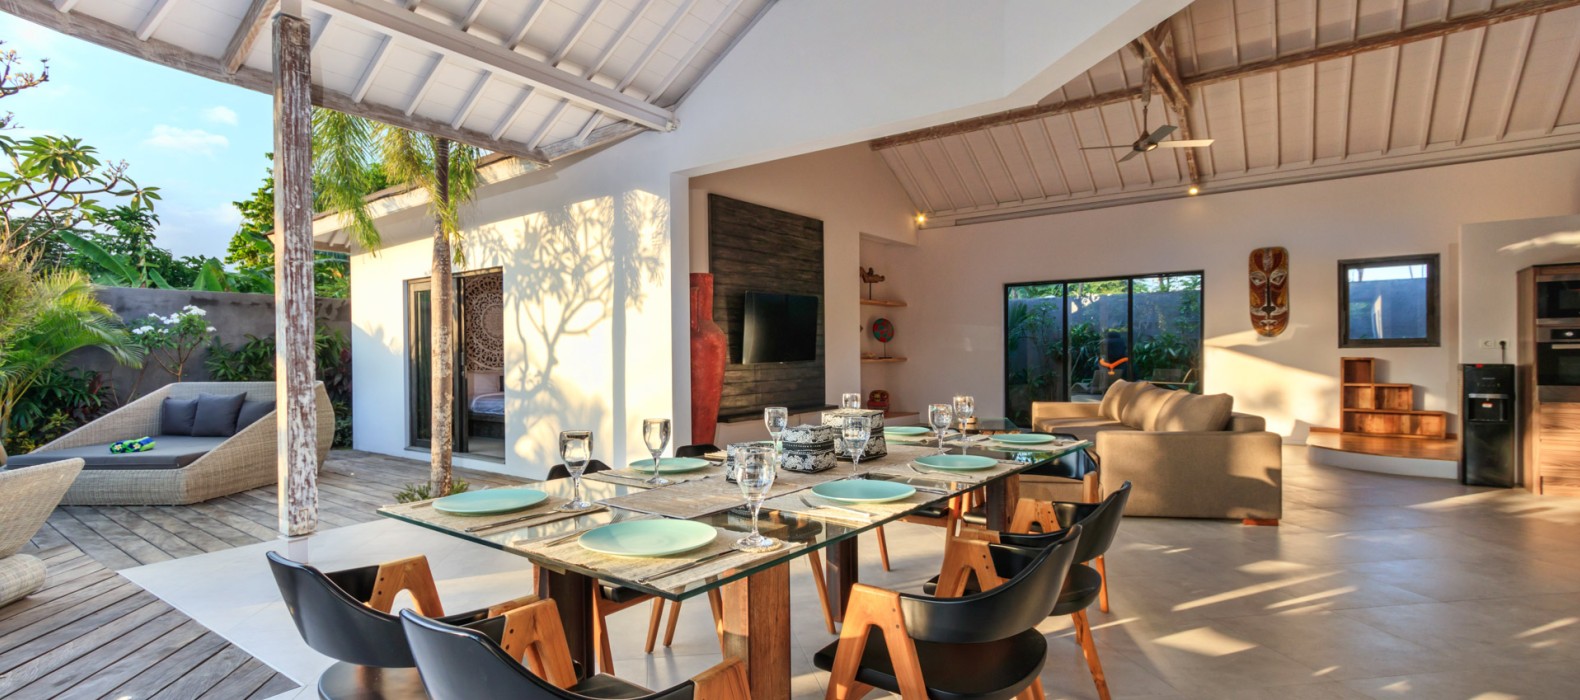 Dining area of Villa Ohana in Bali